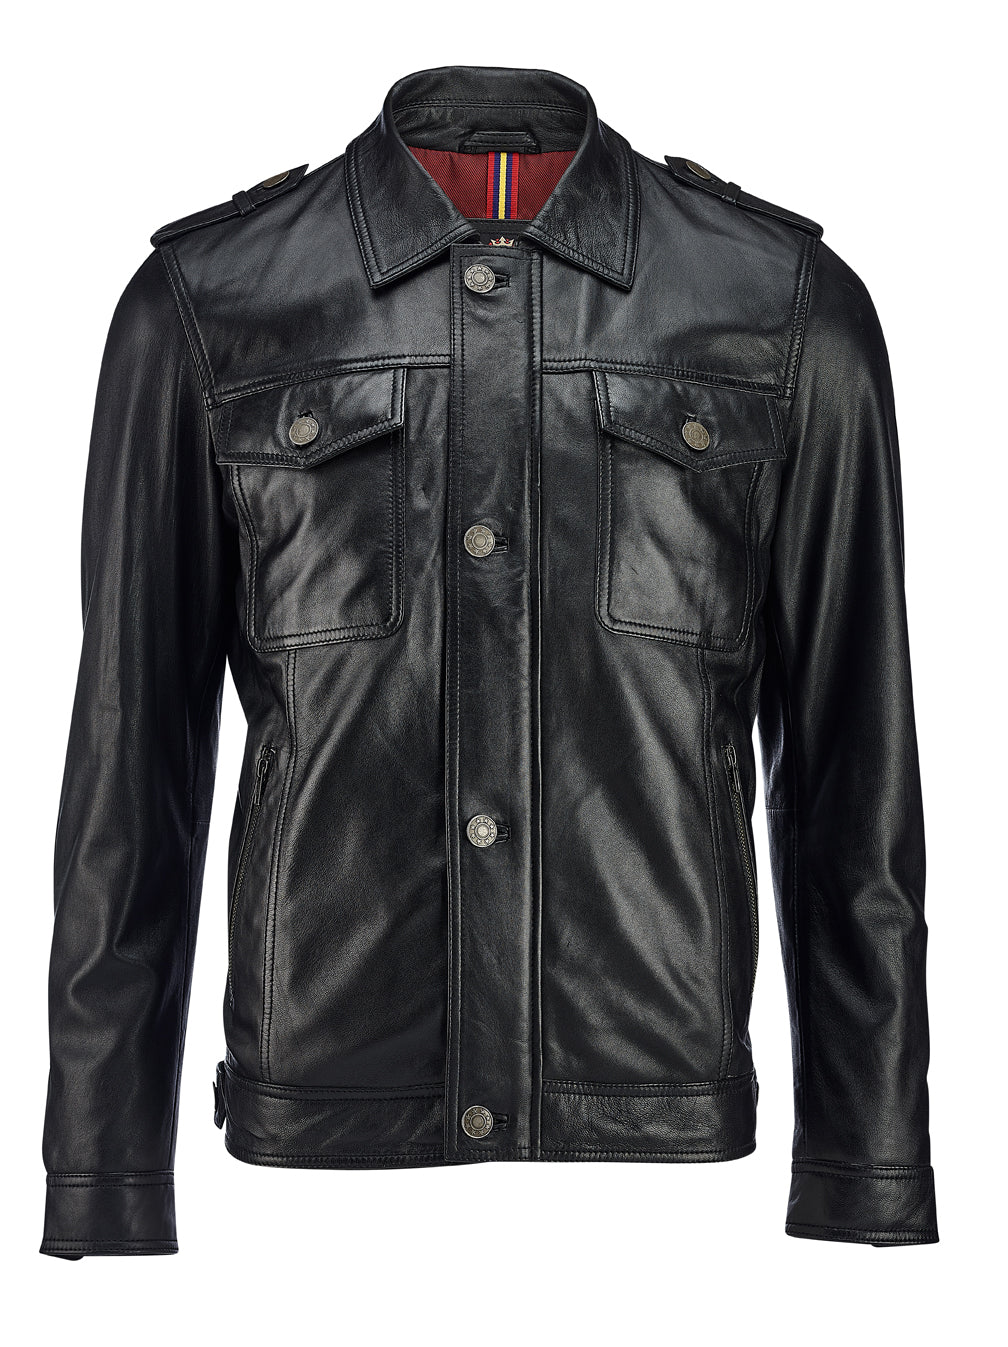 Retro Leather Jacket (Lamb Leather) - The Long Voyage 3XL